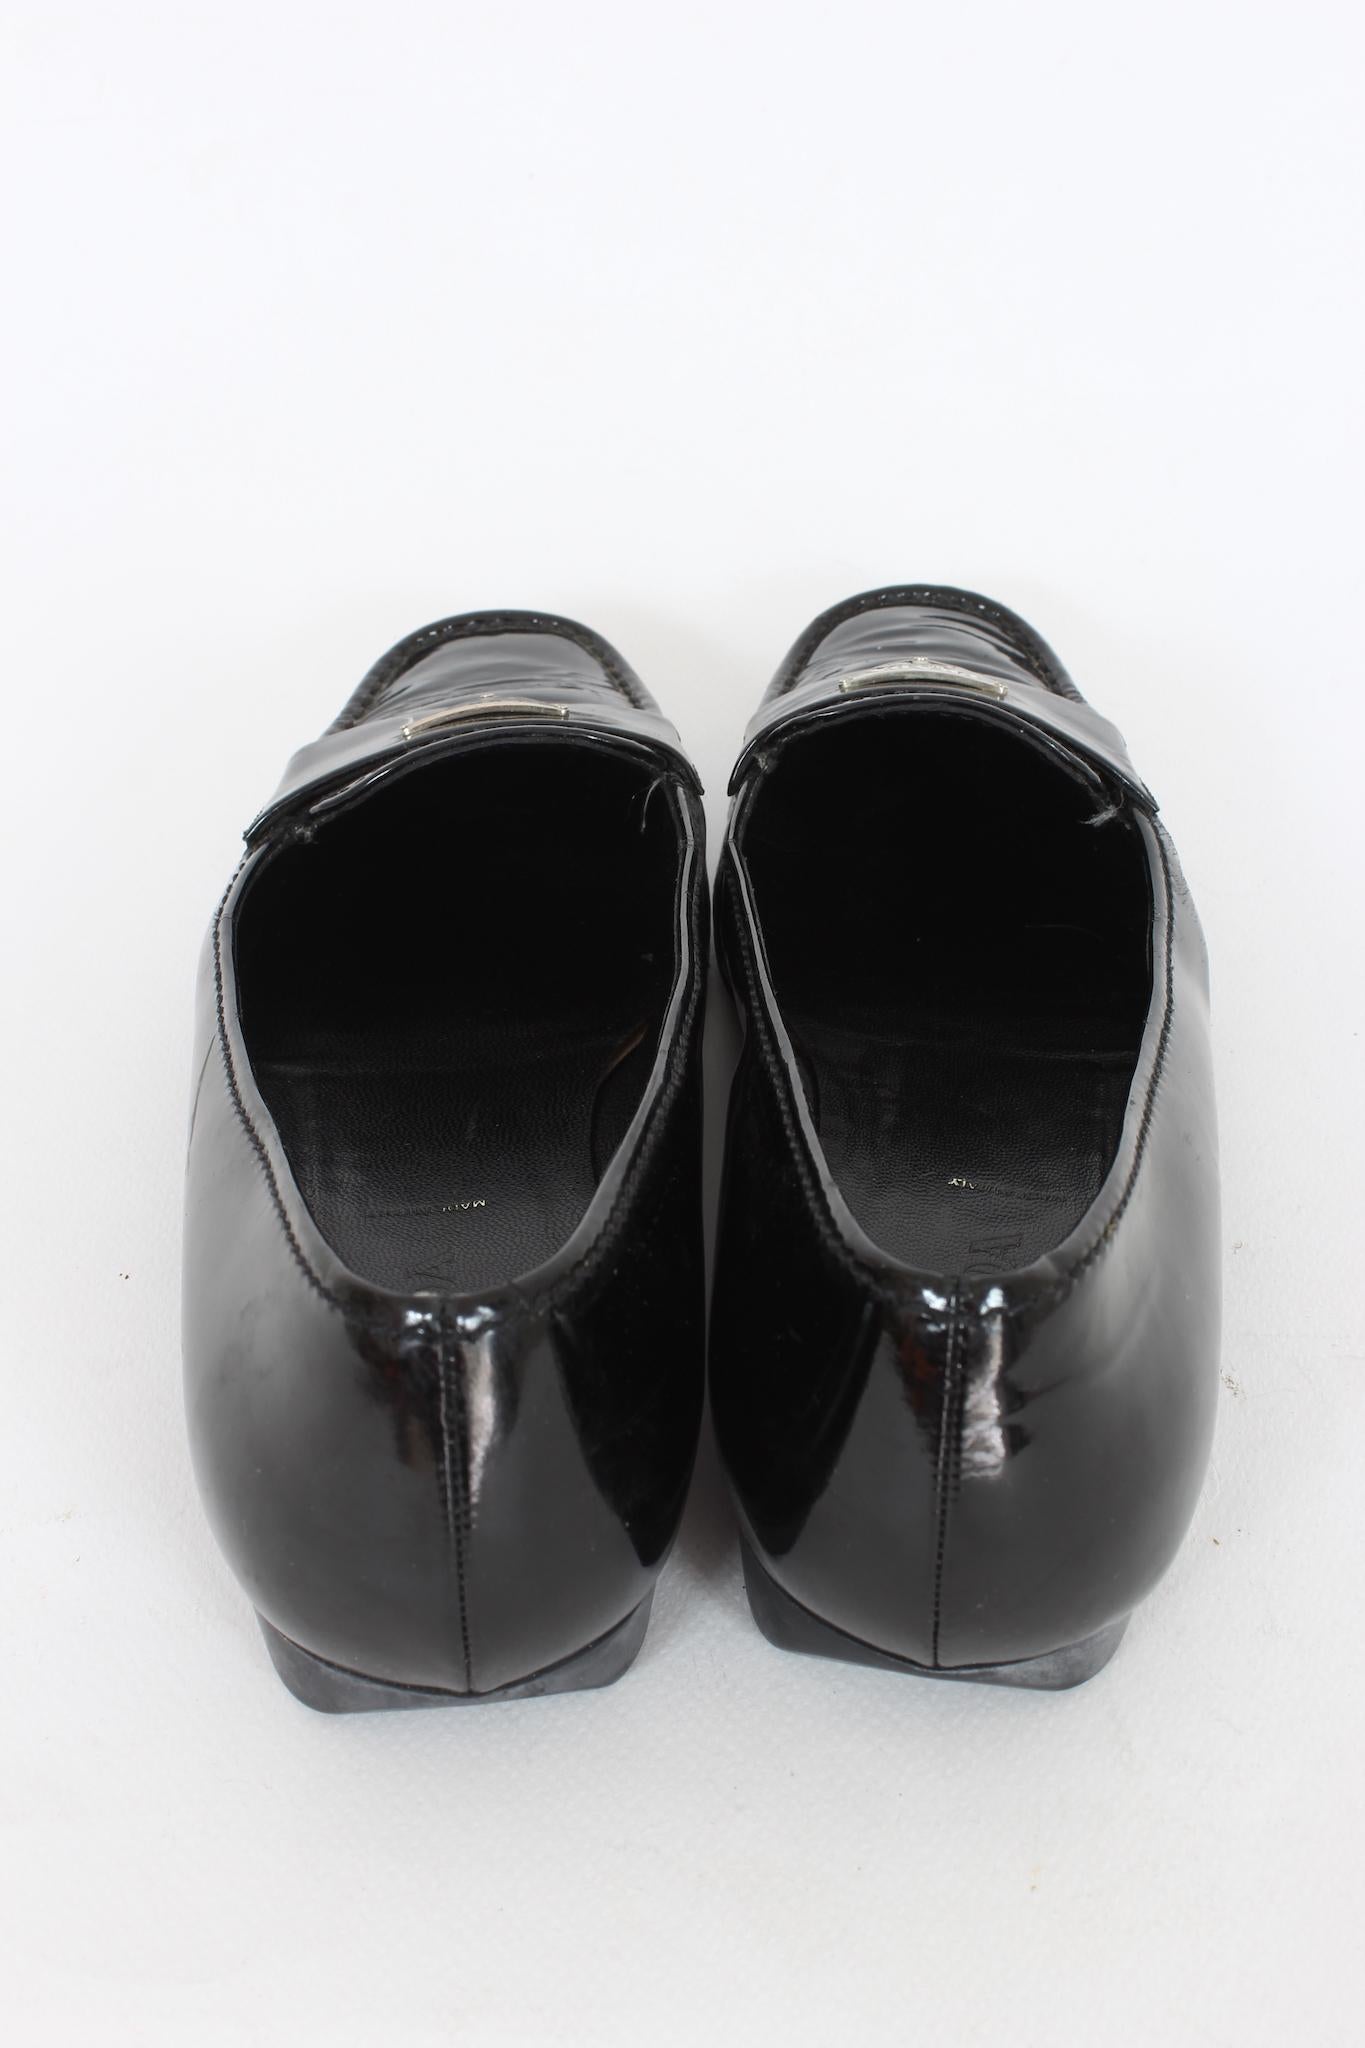 Prada Black Patent Leather Vintage Moccasins Shoes 90s 3